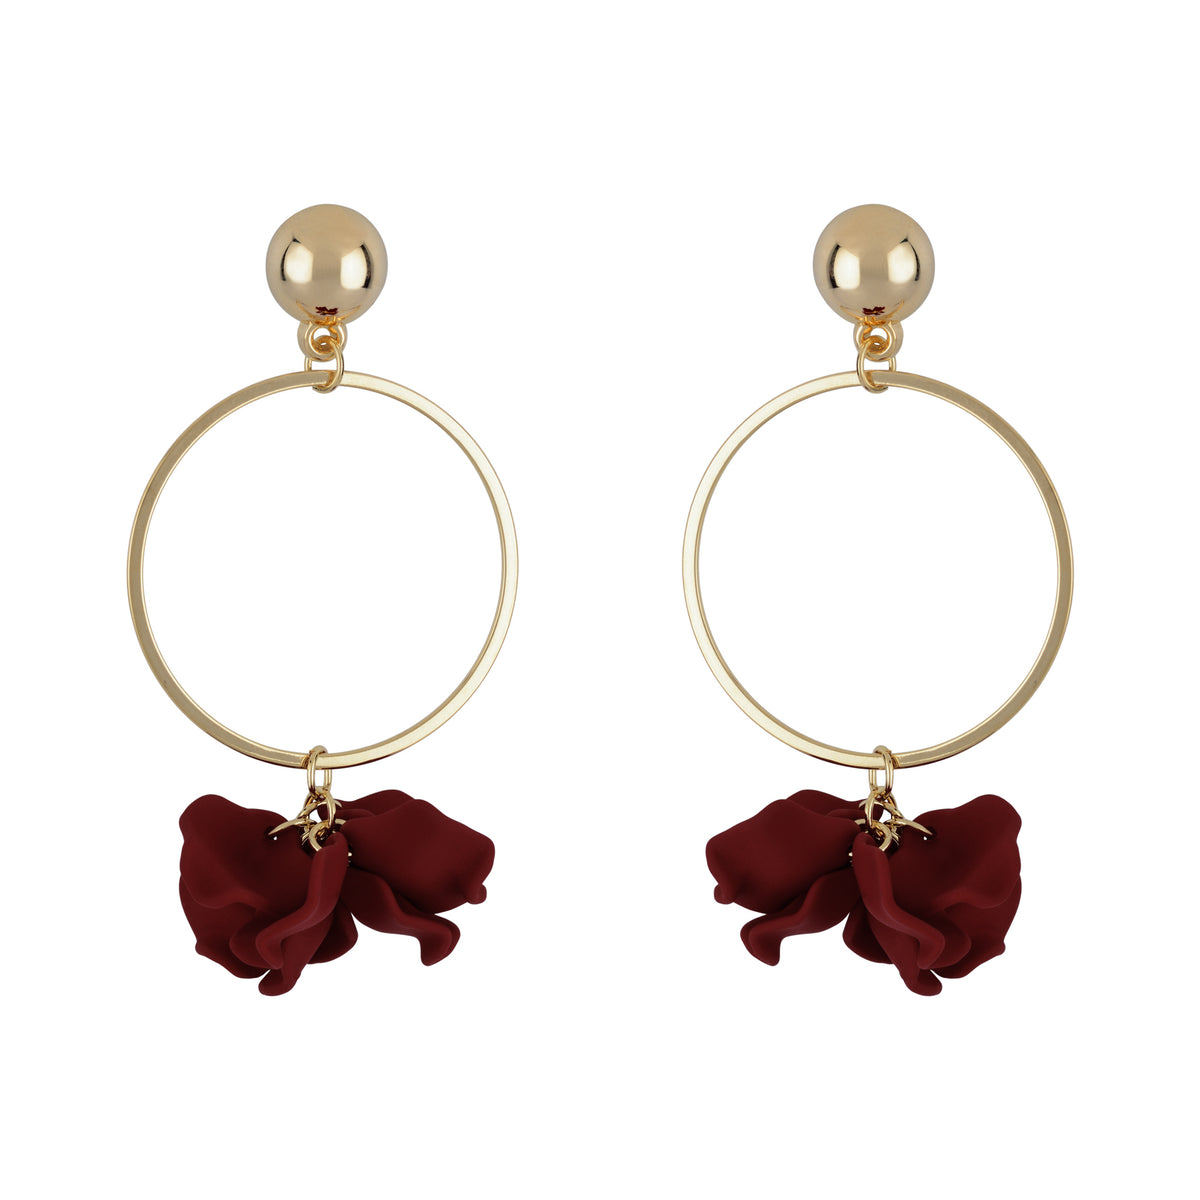 Suspended Gold Ring Petal Earrings - Red Maroon